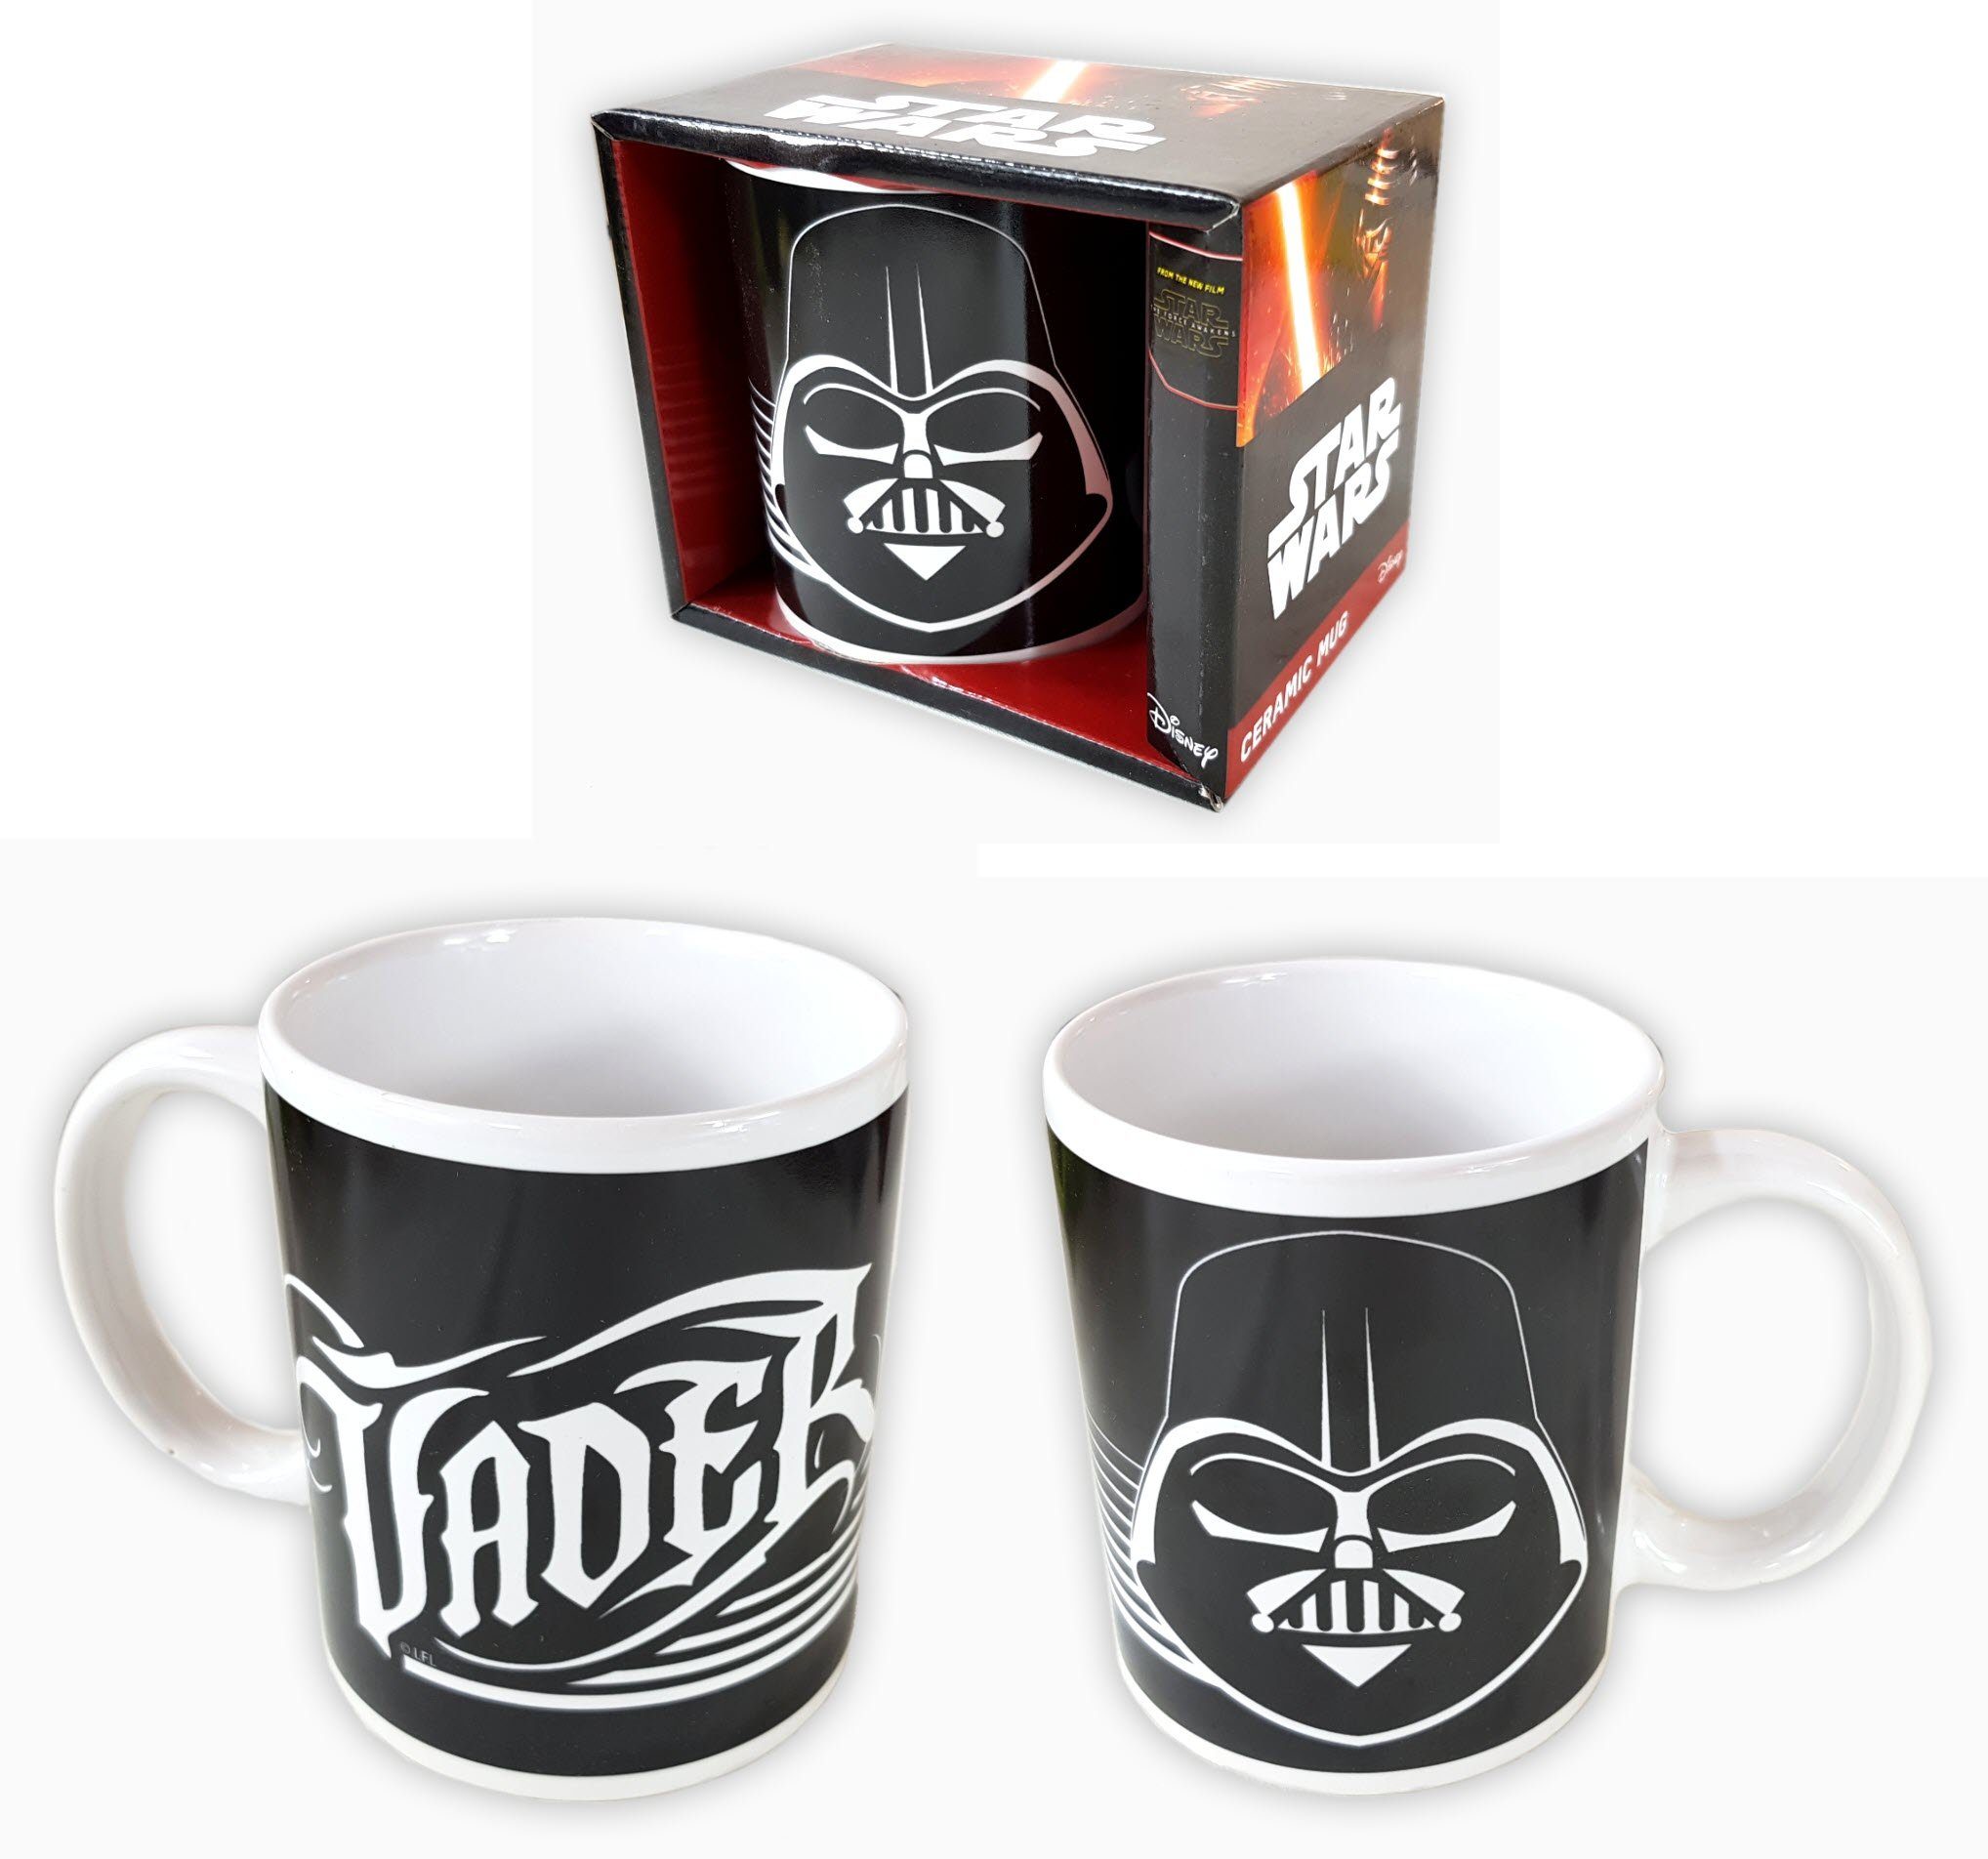 Star Wars Tasse Star Wars 7 Darth Vader Keramiktasse Kaffeetasse  Kaffeebecher 310 ml